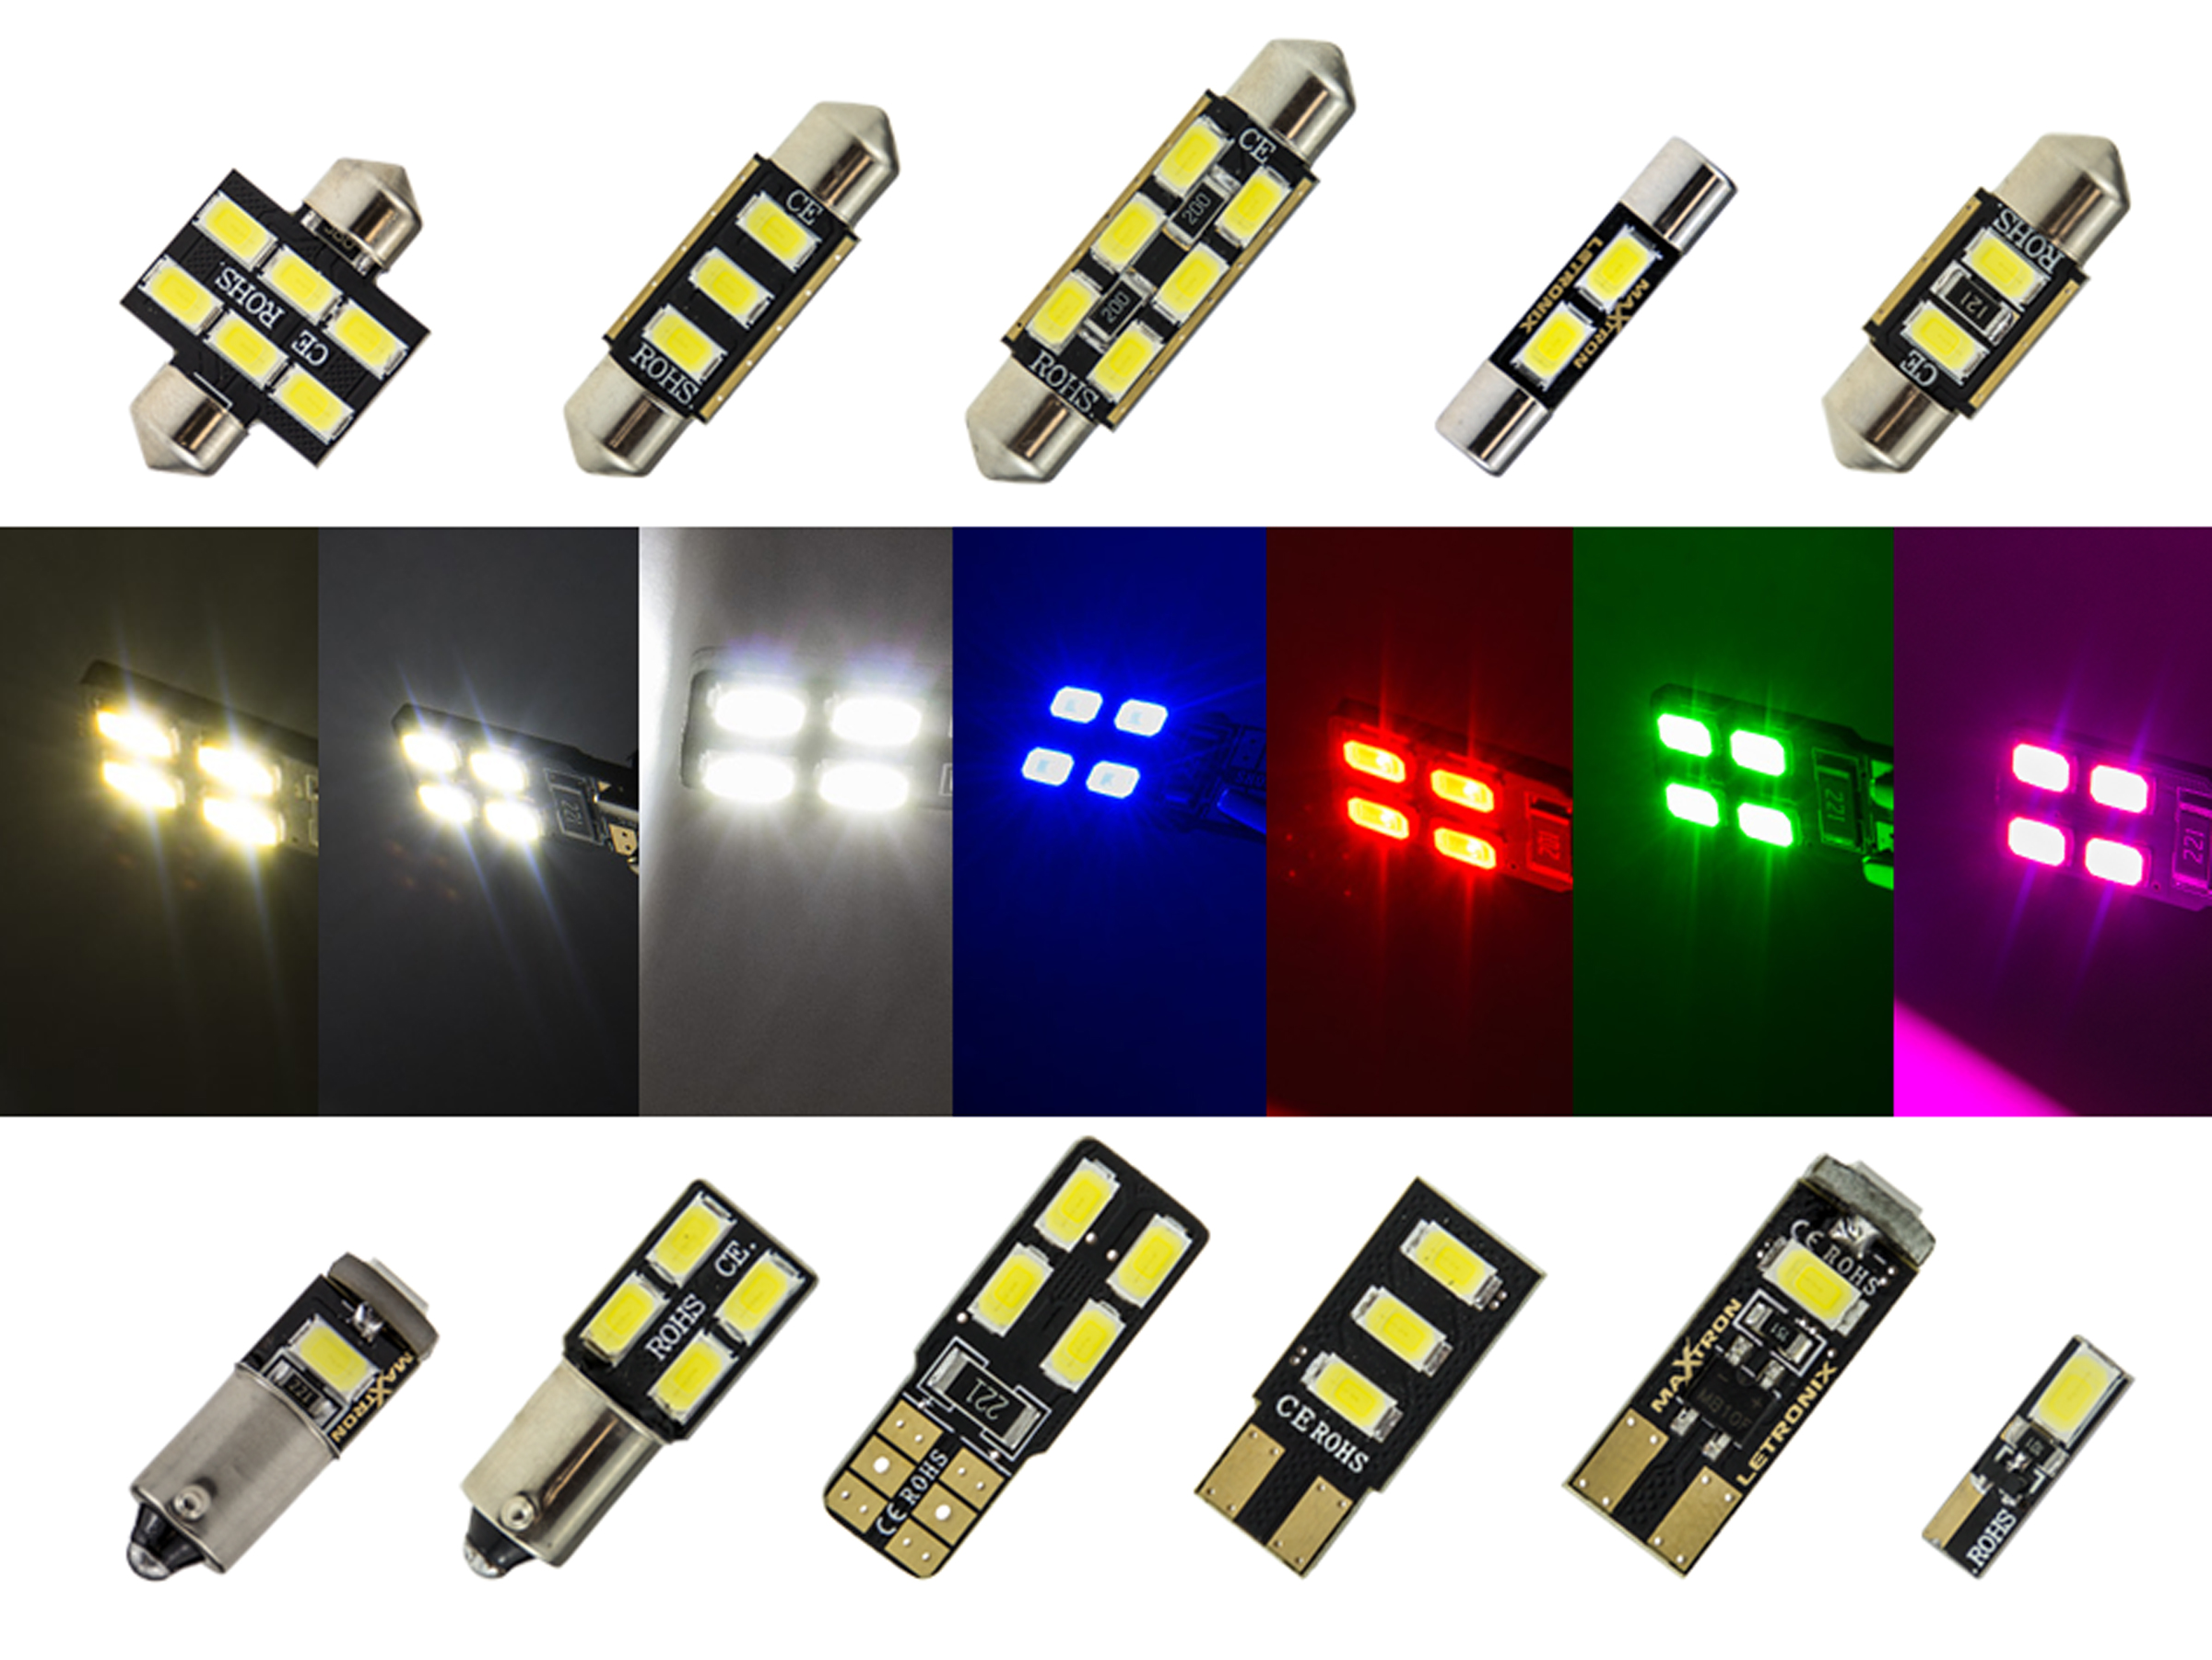 LETRONIX RGB Full LED Rainbow Fußraumbeleuchtung 2er Set 25cm RGBIC  LED-Leisten